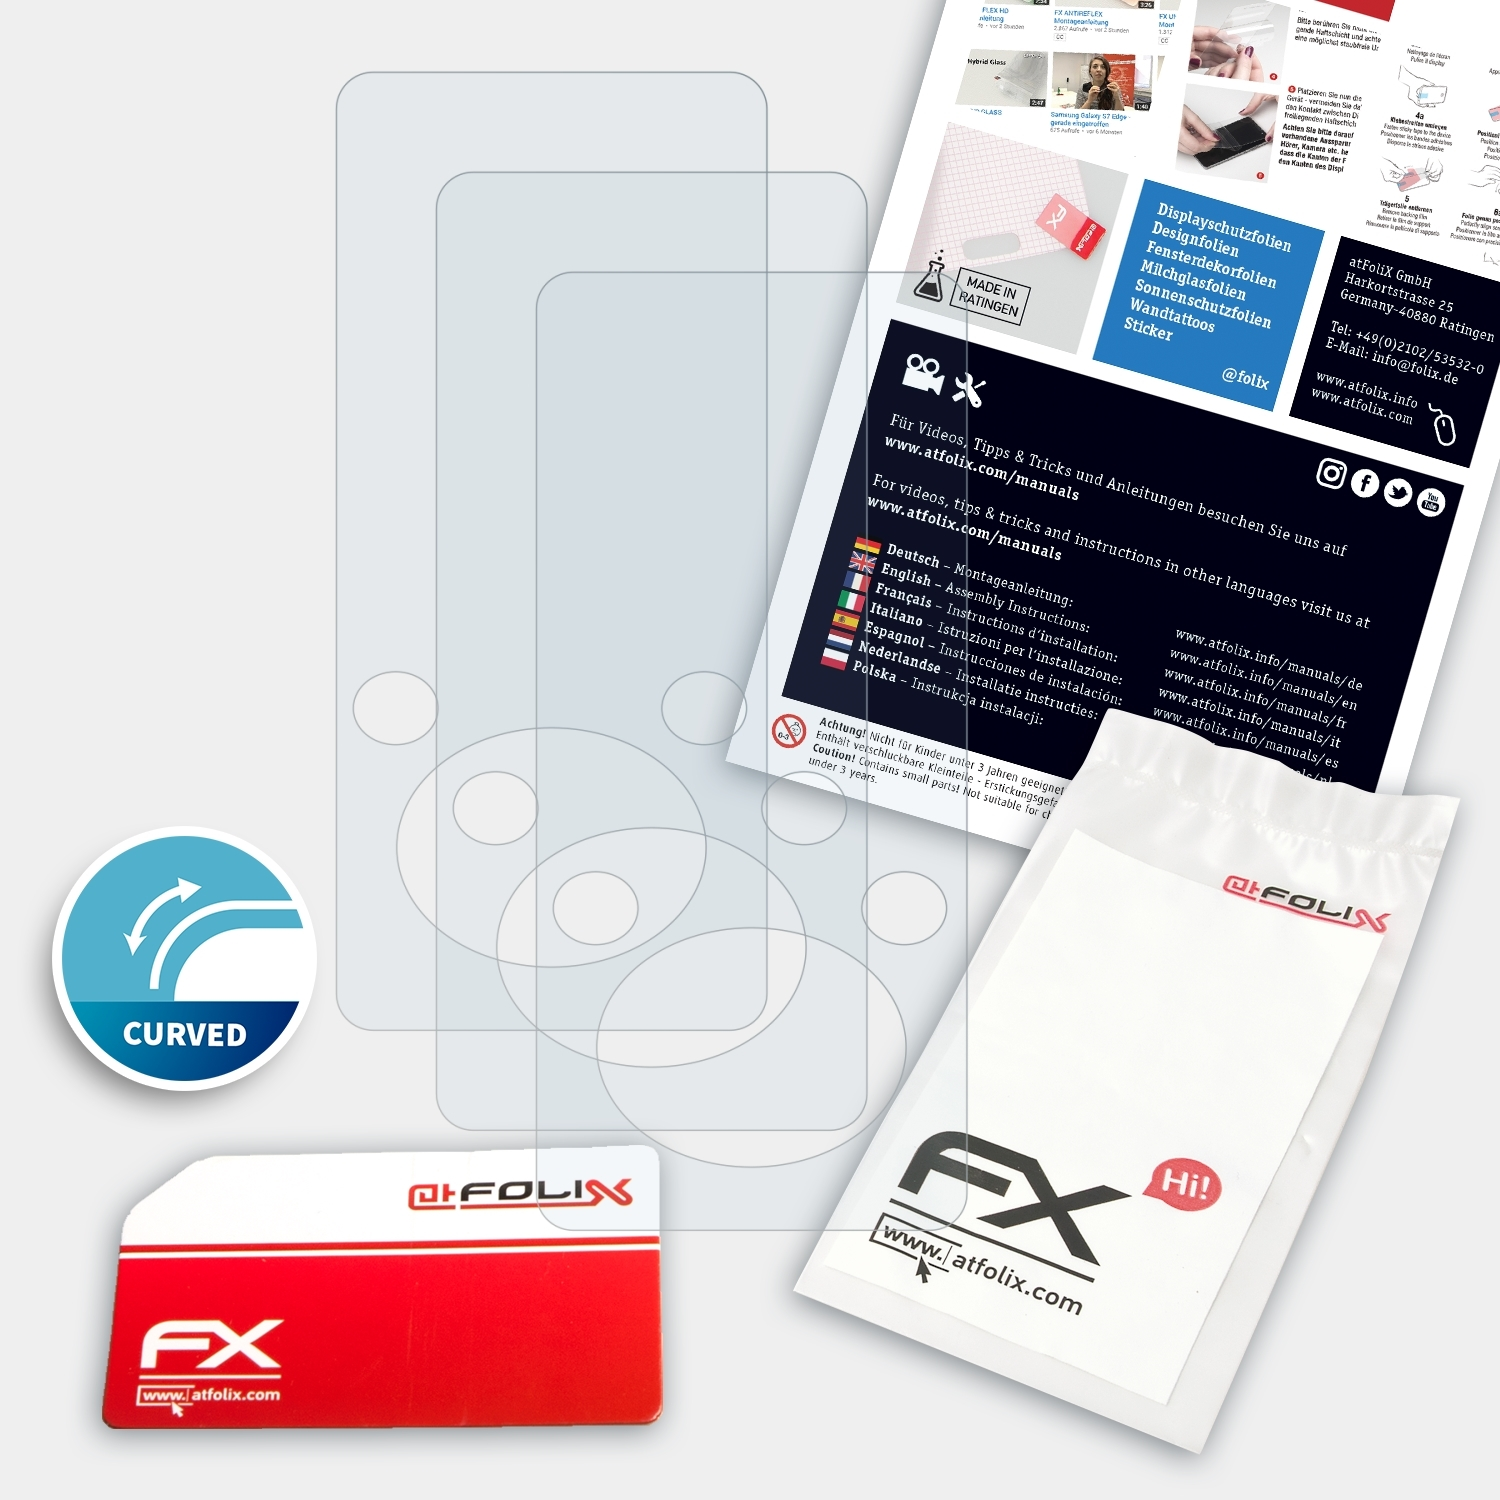 ATFOLIX 3x FX-ActiFleX Bertronic 909) BC Displayschutz(für